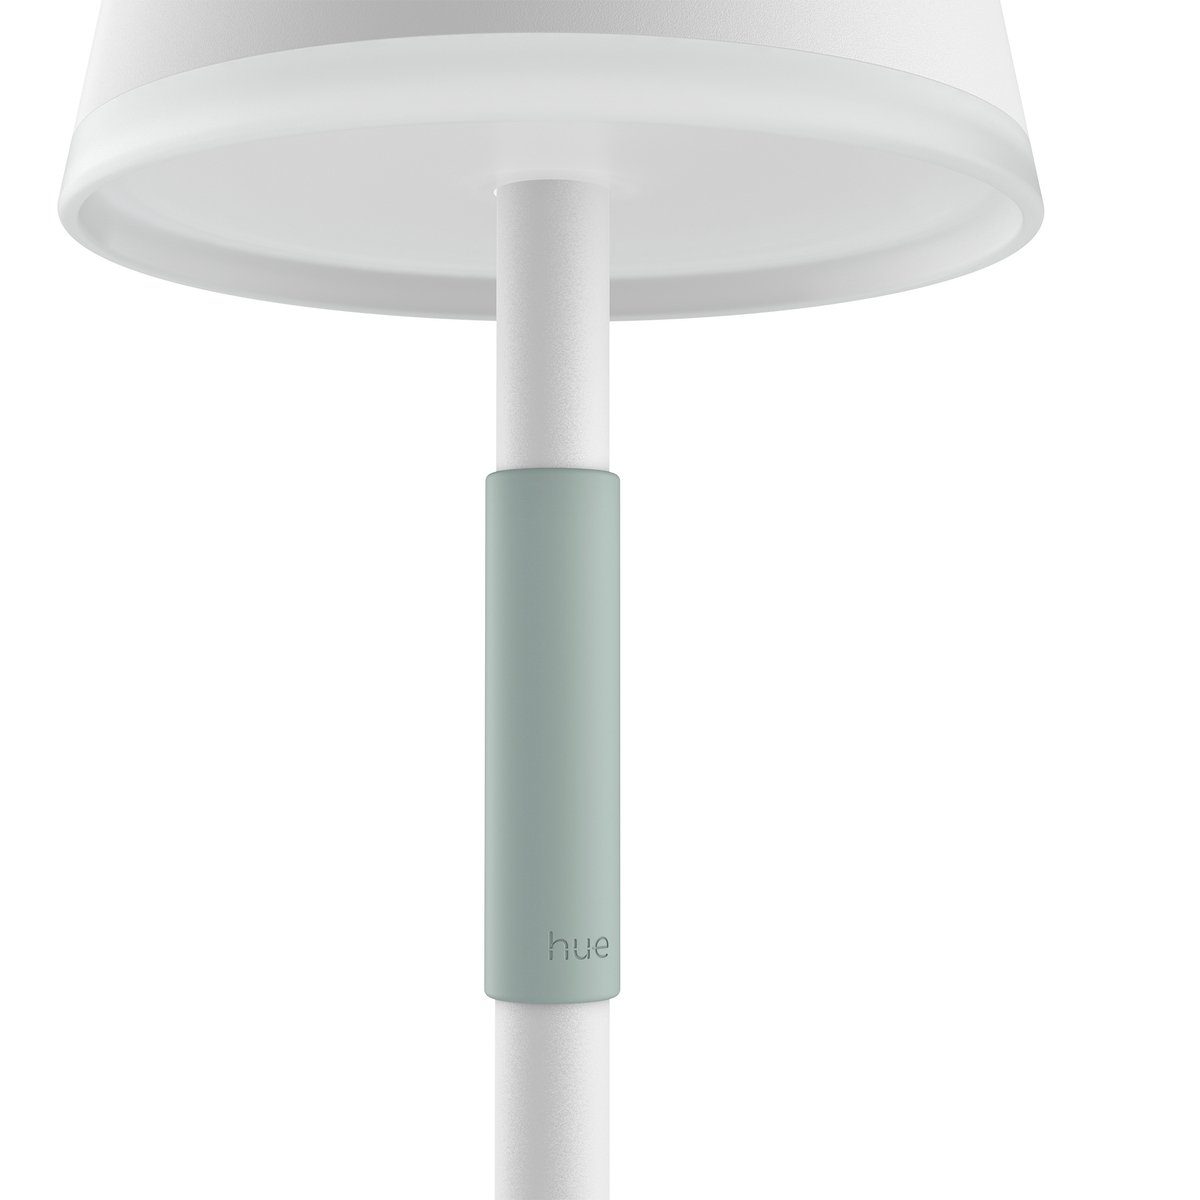 LED White integriert Ambiance Tischleuchte, Go Color Tischleuchte & Philips Tragbare Hue fest LED